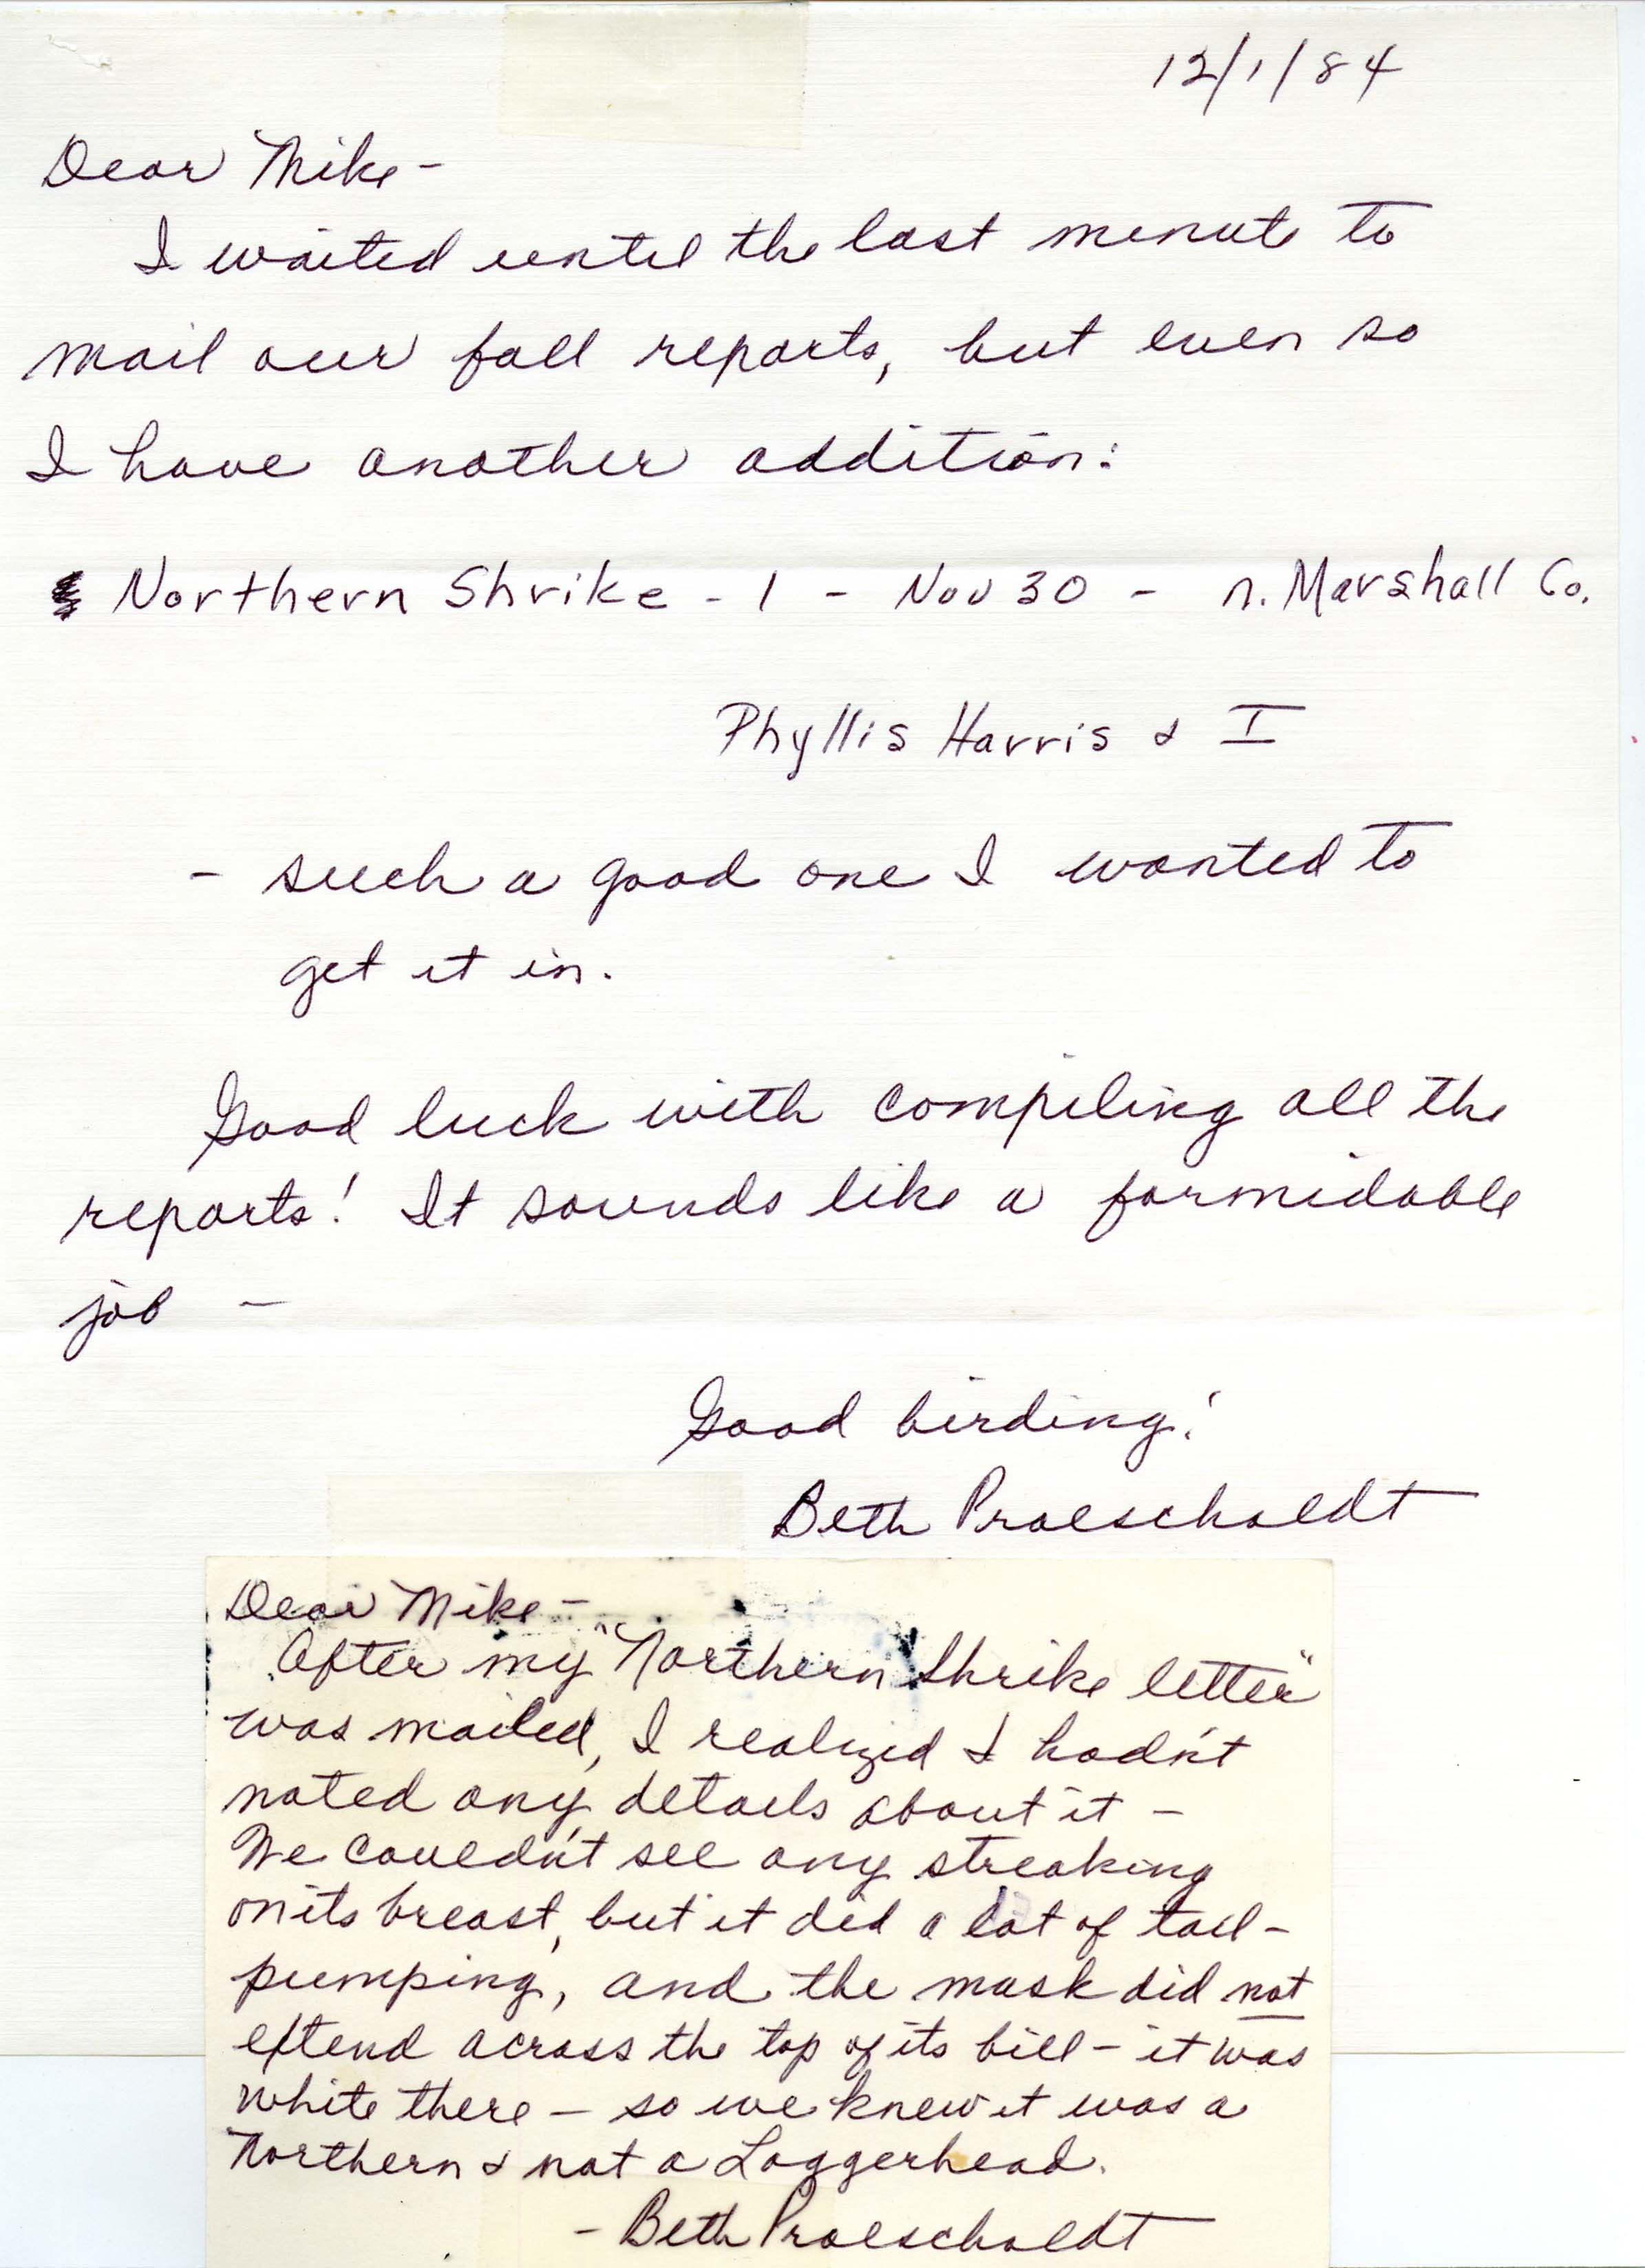 Beth Proescholdt letter to Michael C. Newlon regarding a Northern Shrike sighting, December 1, 1984